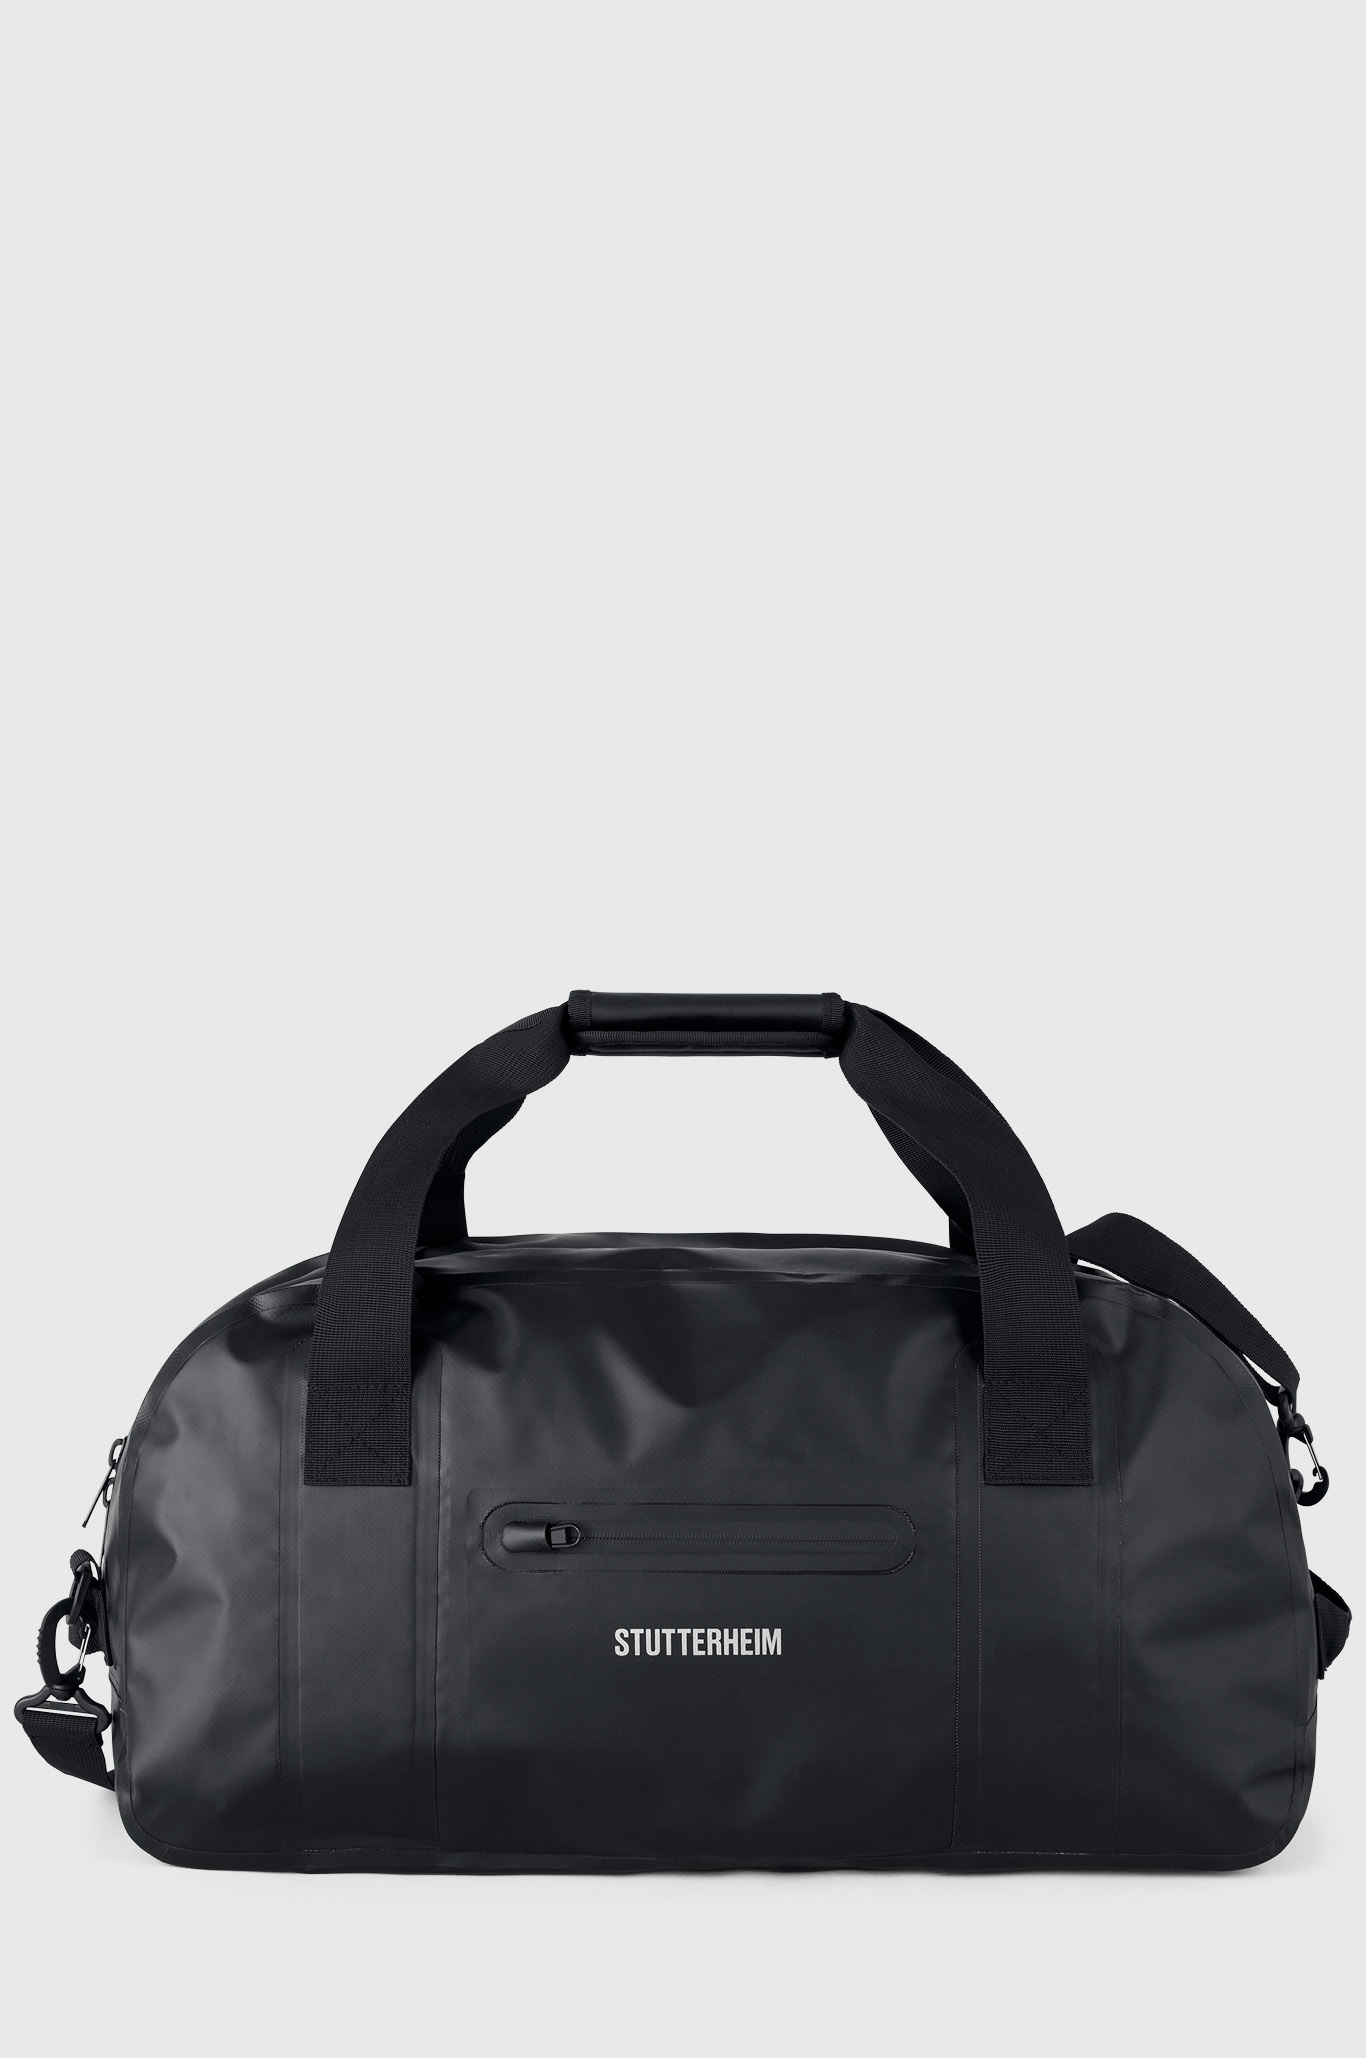 Stutterheim Drops Minimalist Waterproof Bag Line - Maxim